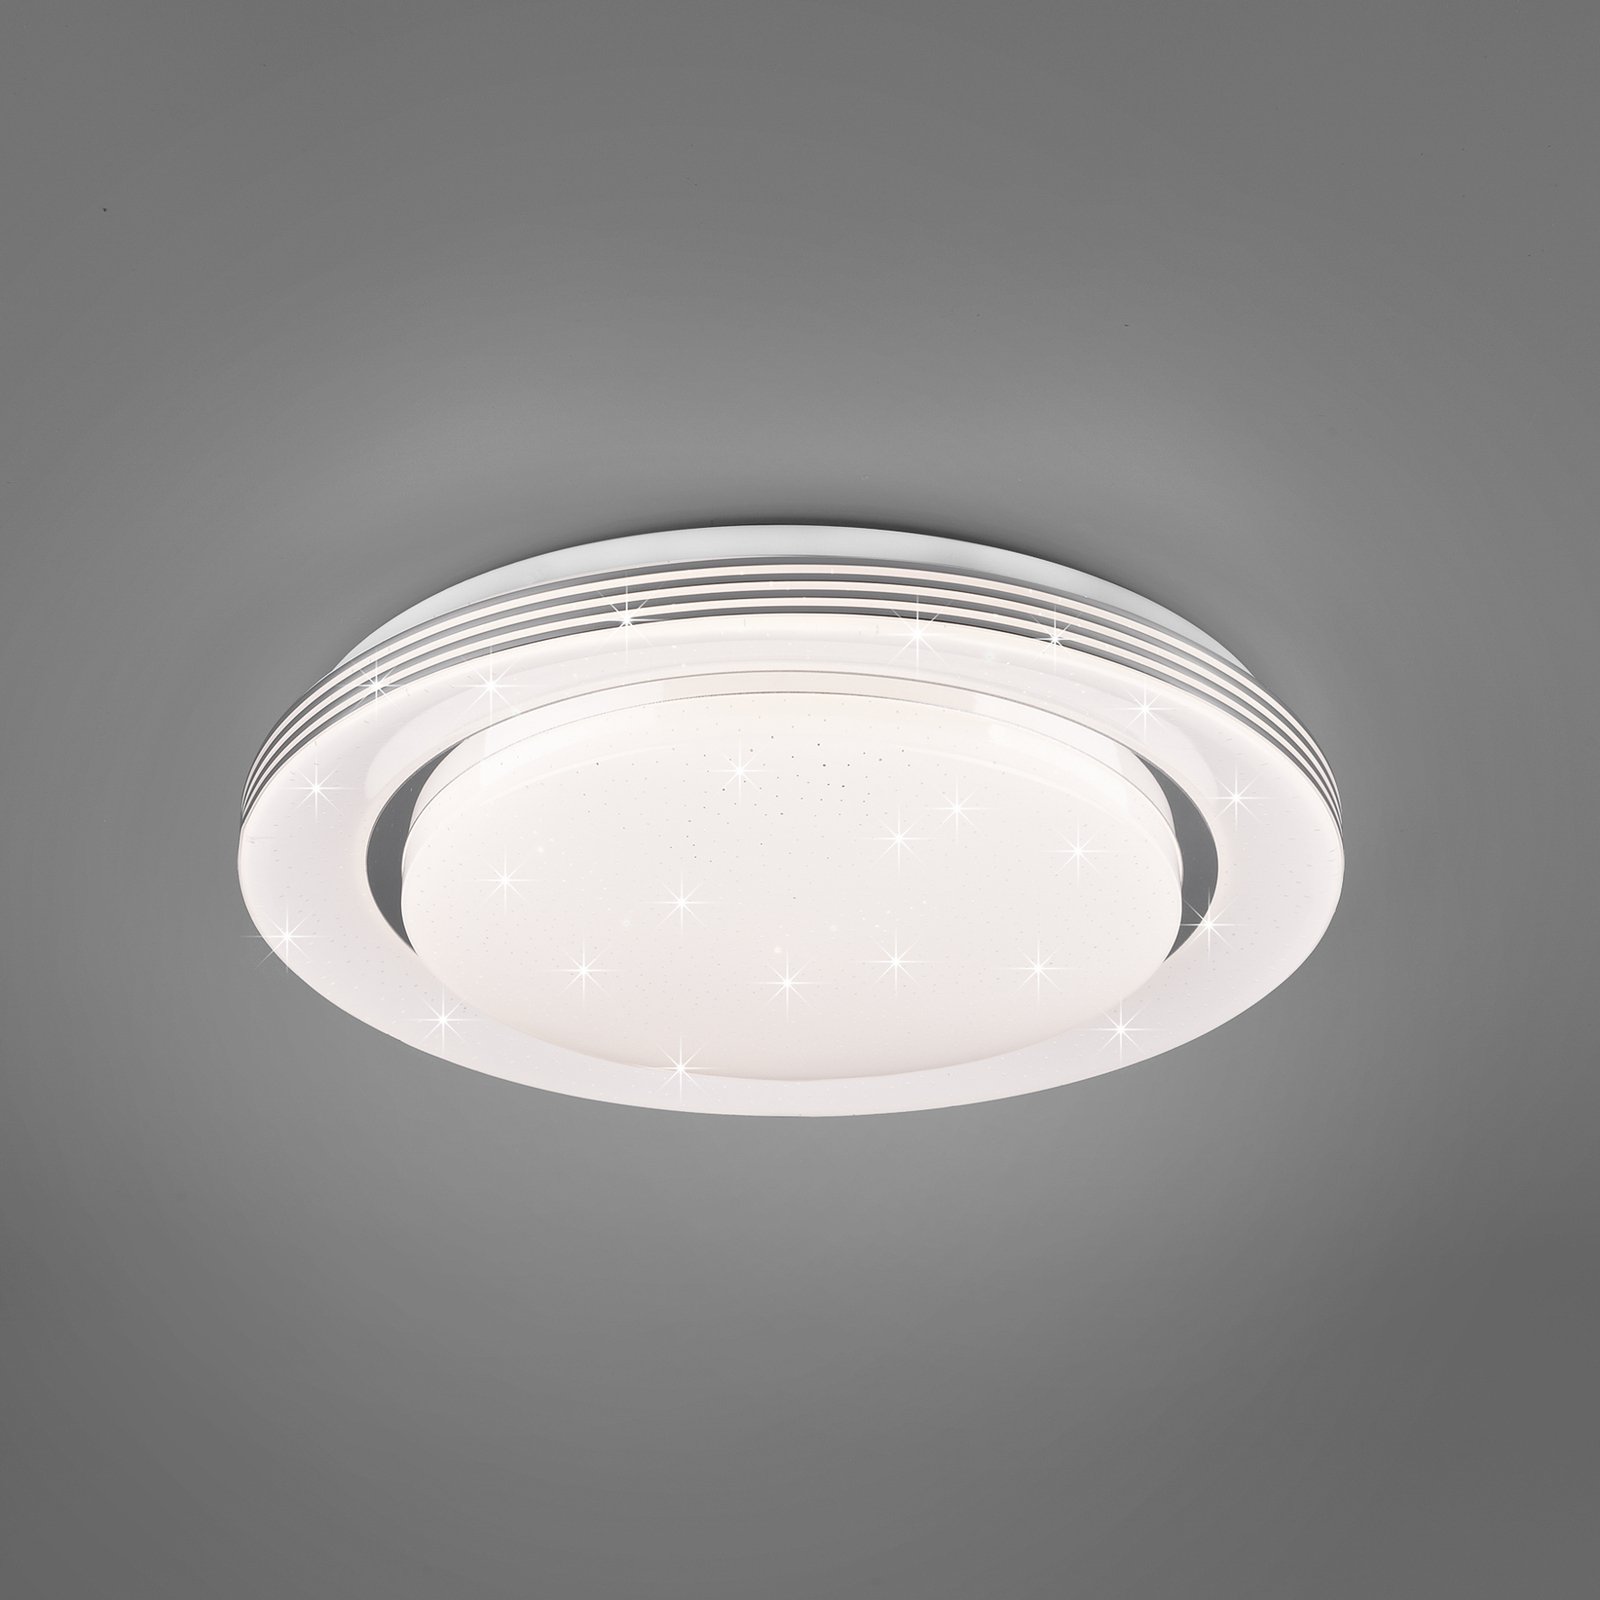 LED-taklampe Atria, Ø 38 cm, hvit, plast, CCT